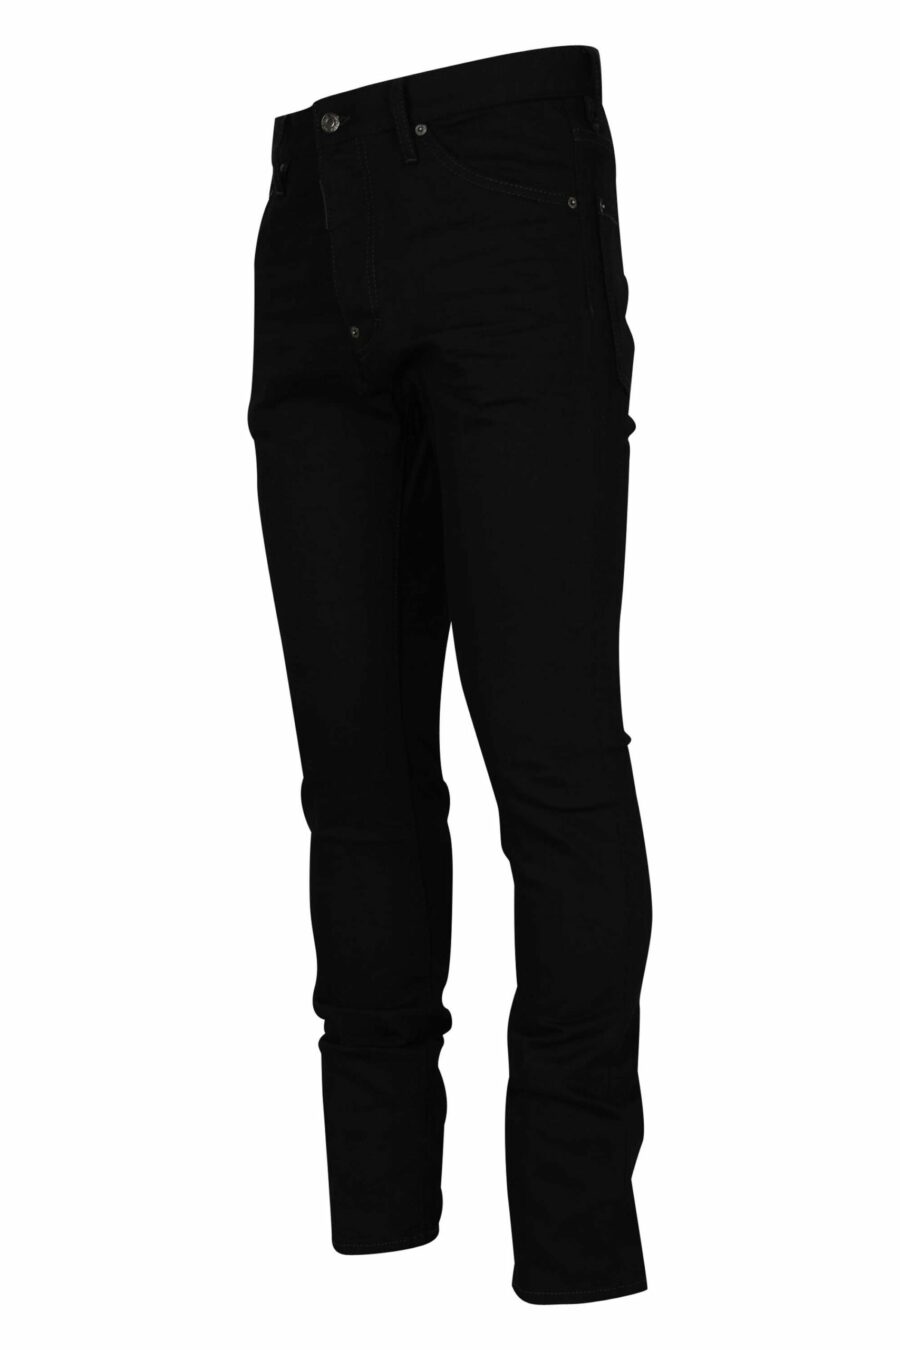 Pantalon noir "Cool guy jean" - 8054148284039 1 échelle